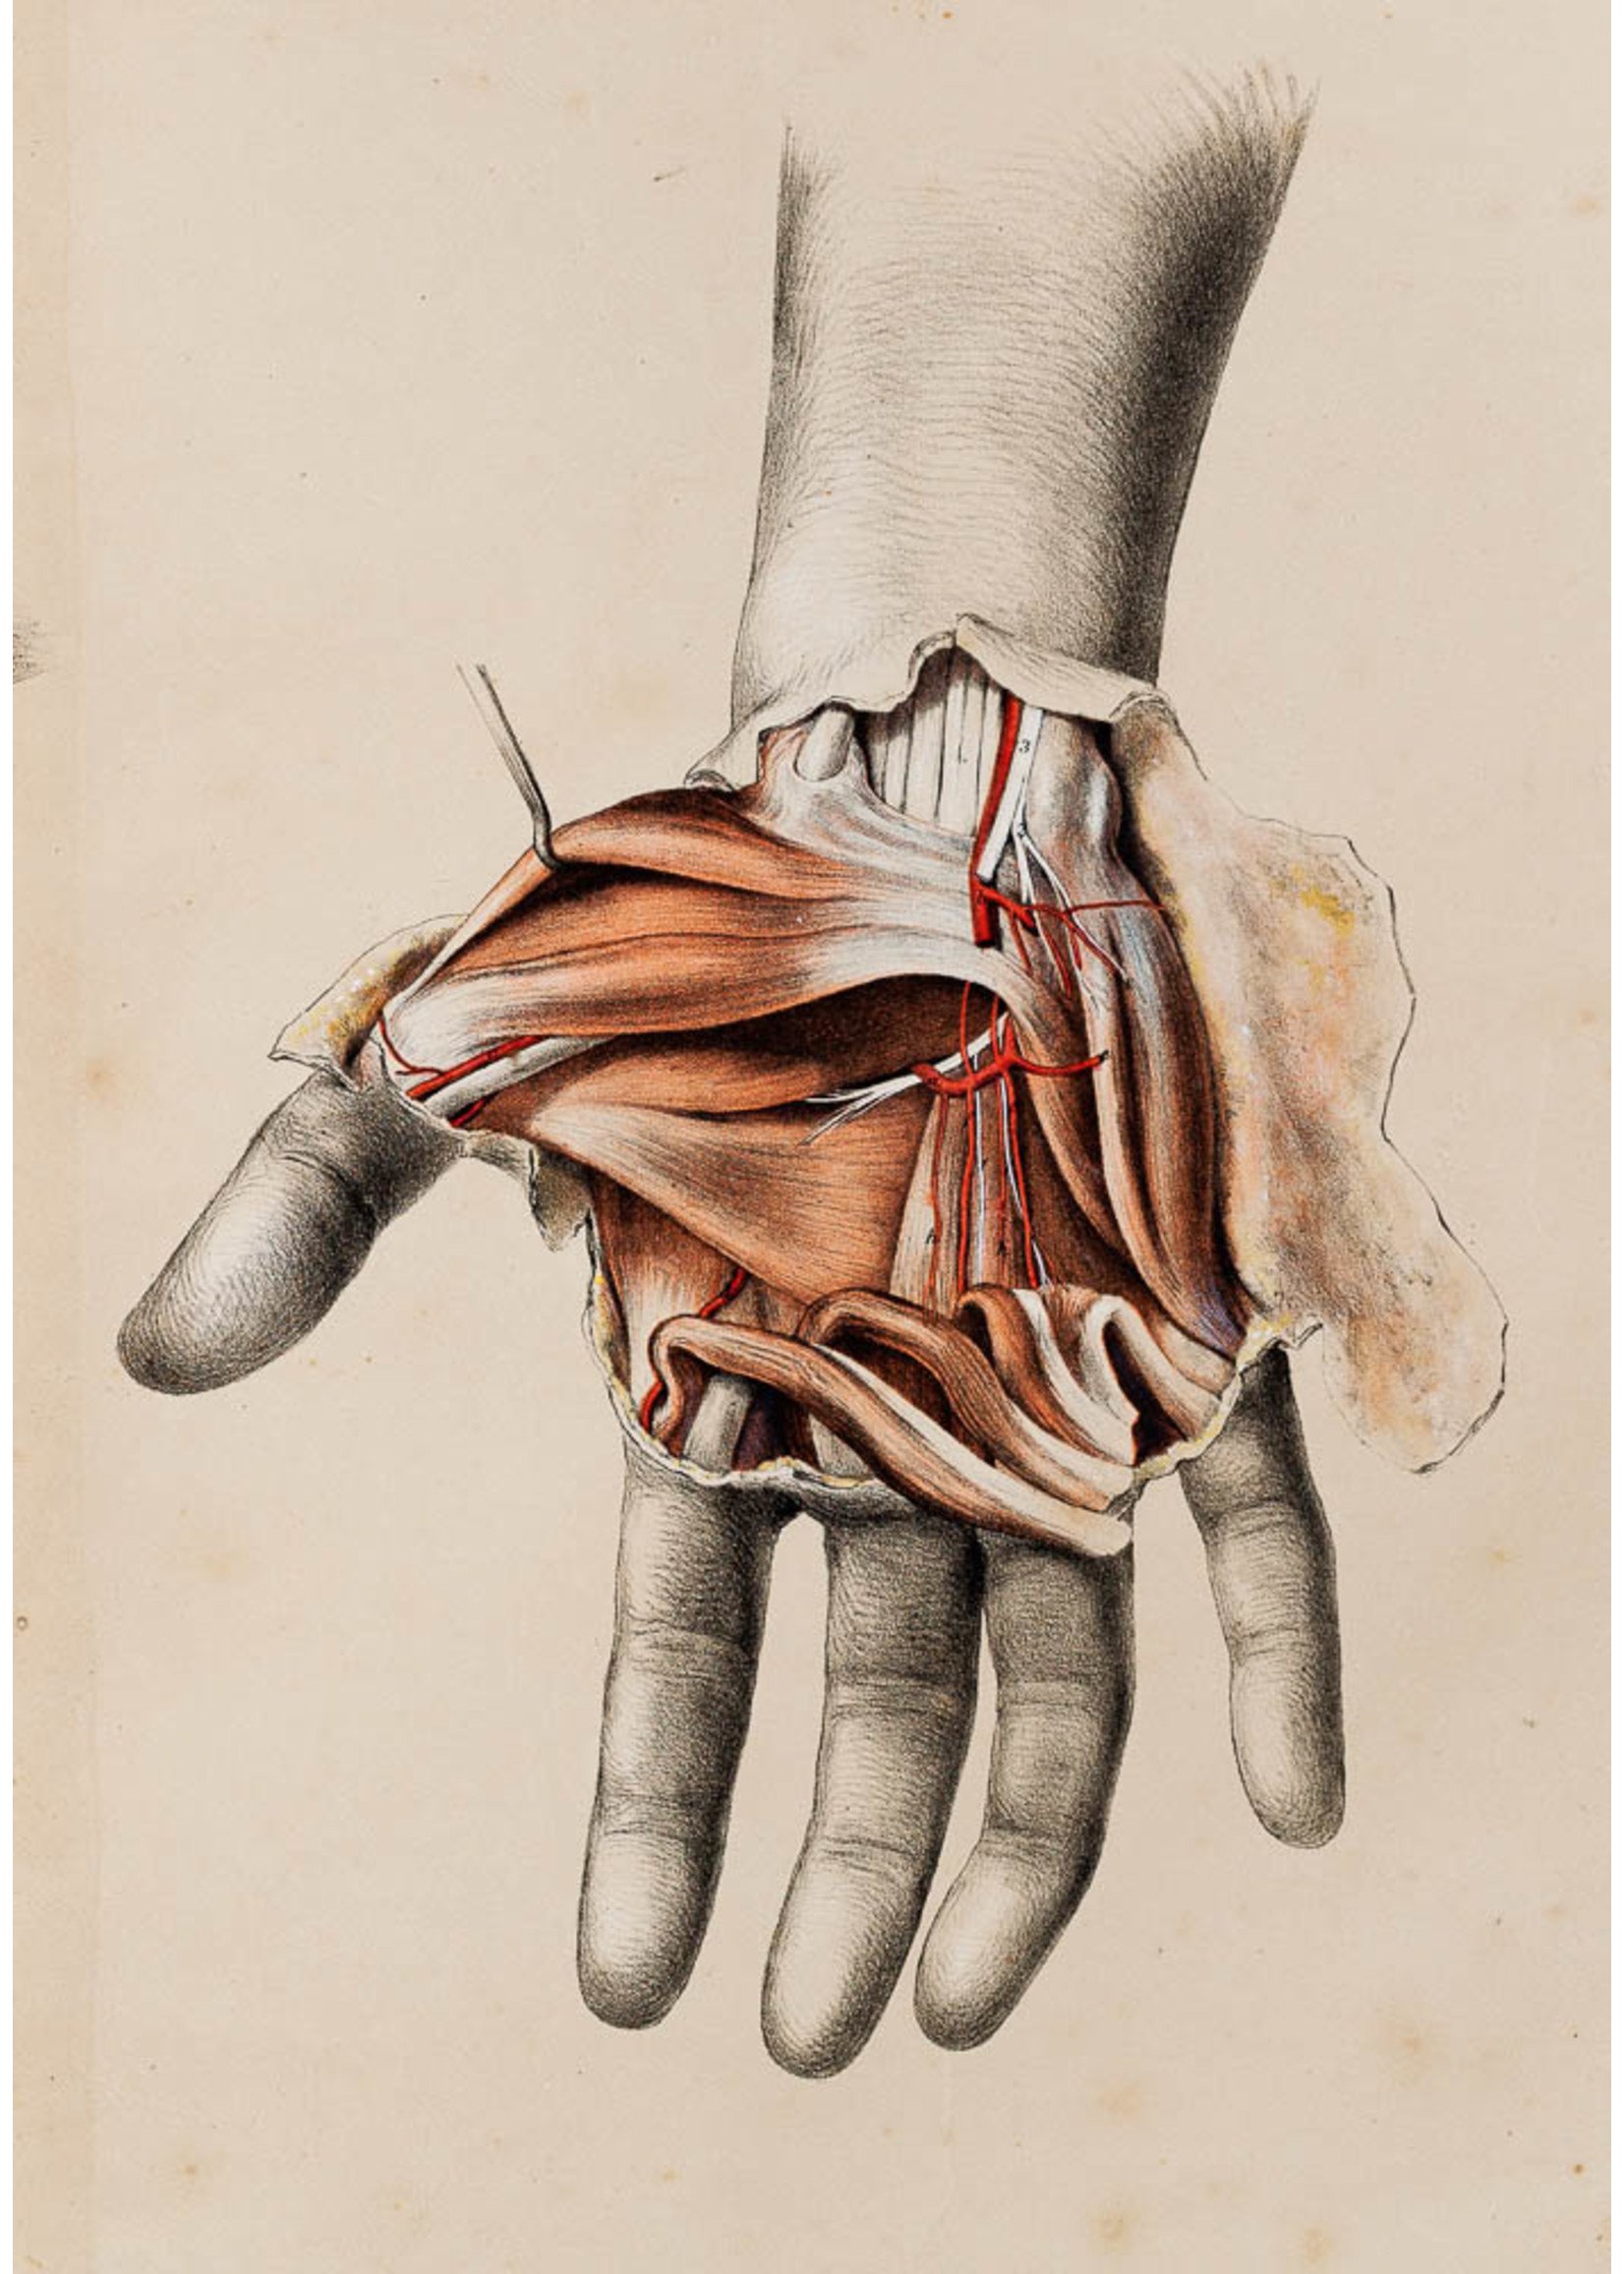 Hands [Anatomy Week 1] by Xaliyah on DeviantArt